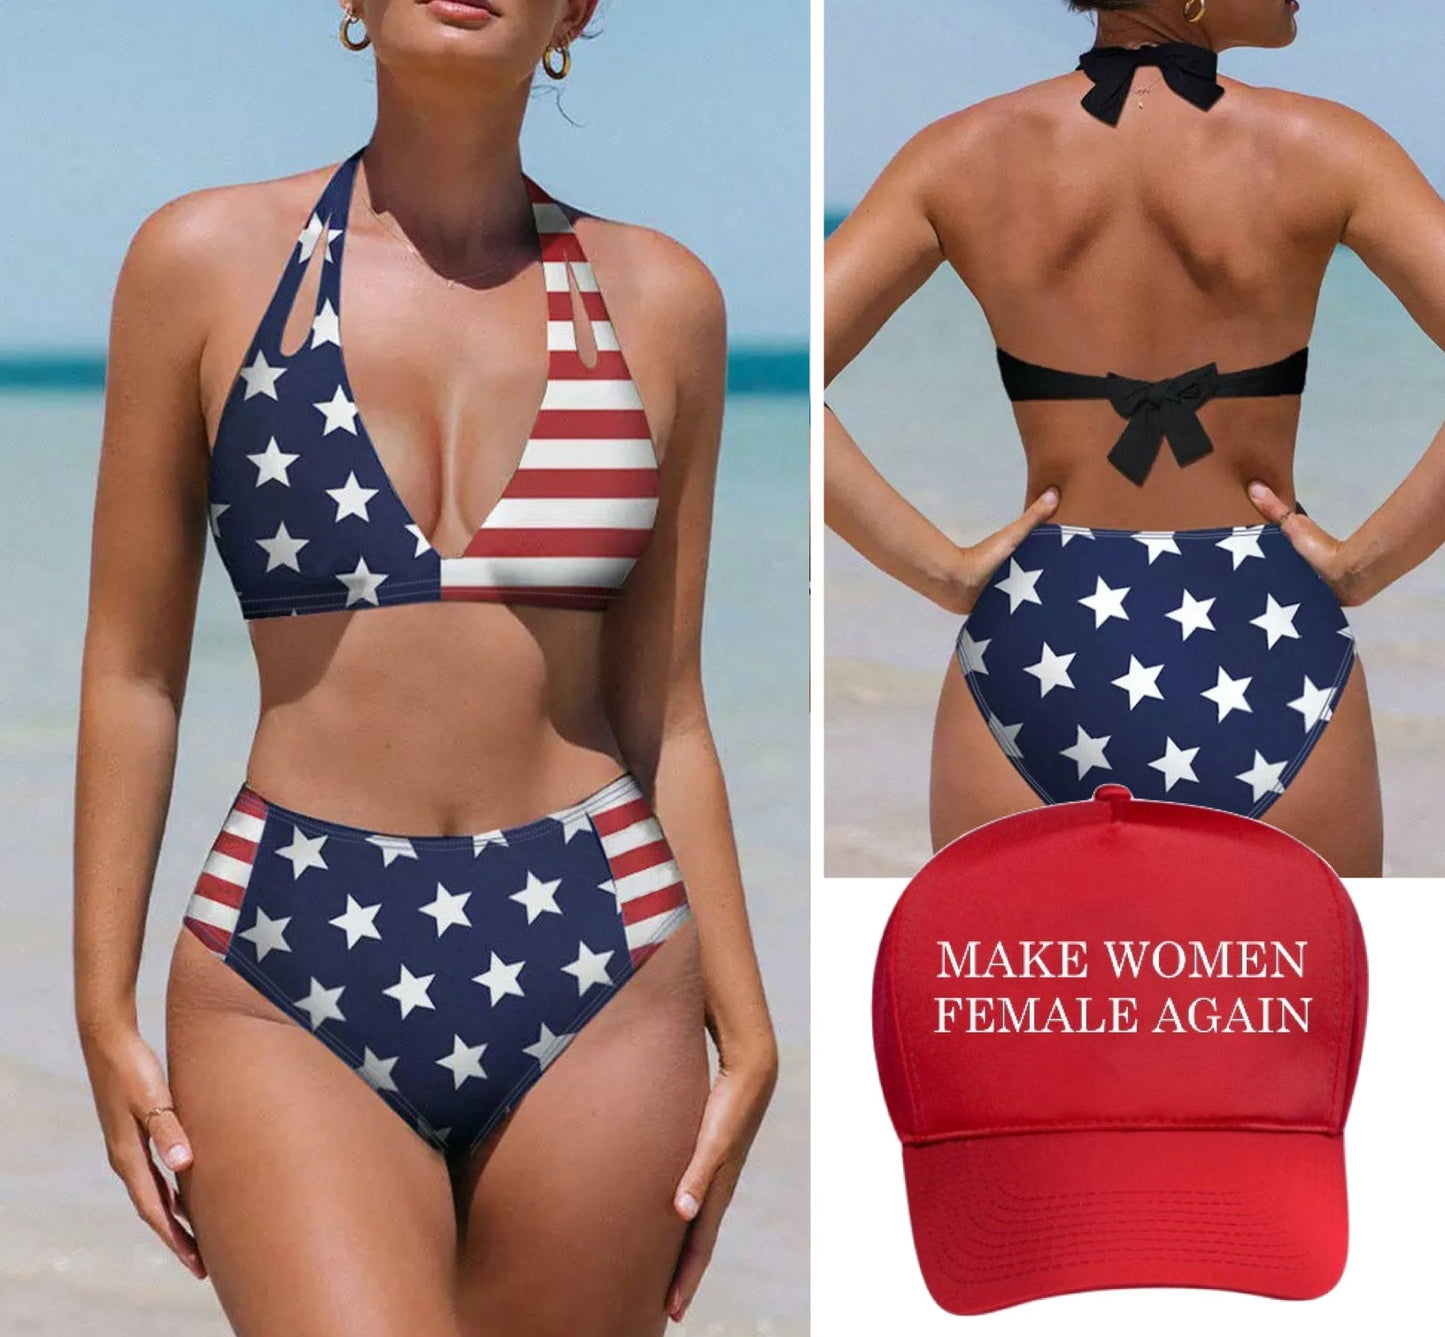 MERICA Women's Bikini (+FREE Hat)